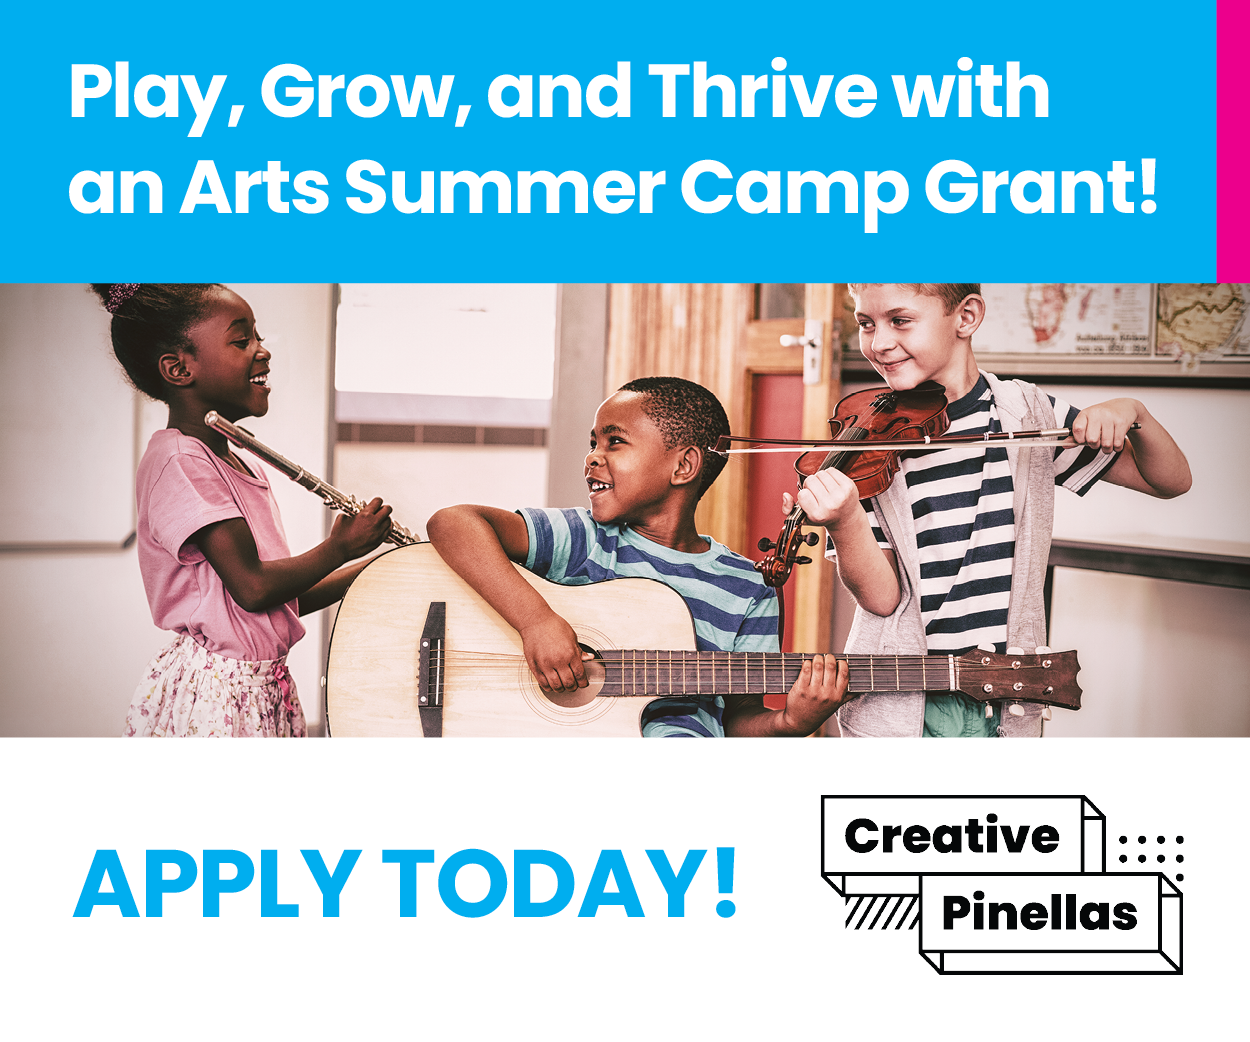 Creative Pinellas Arts Summer Camp Grant